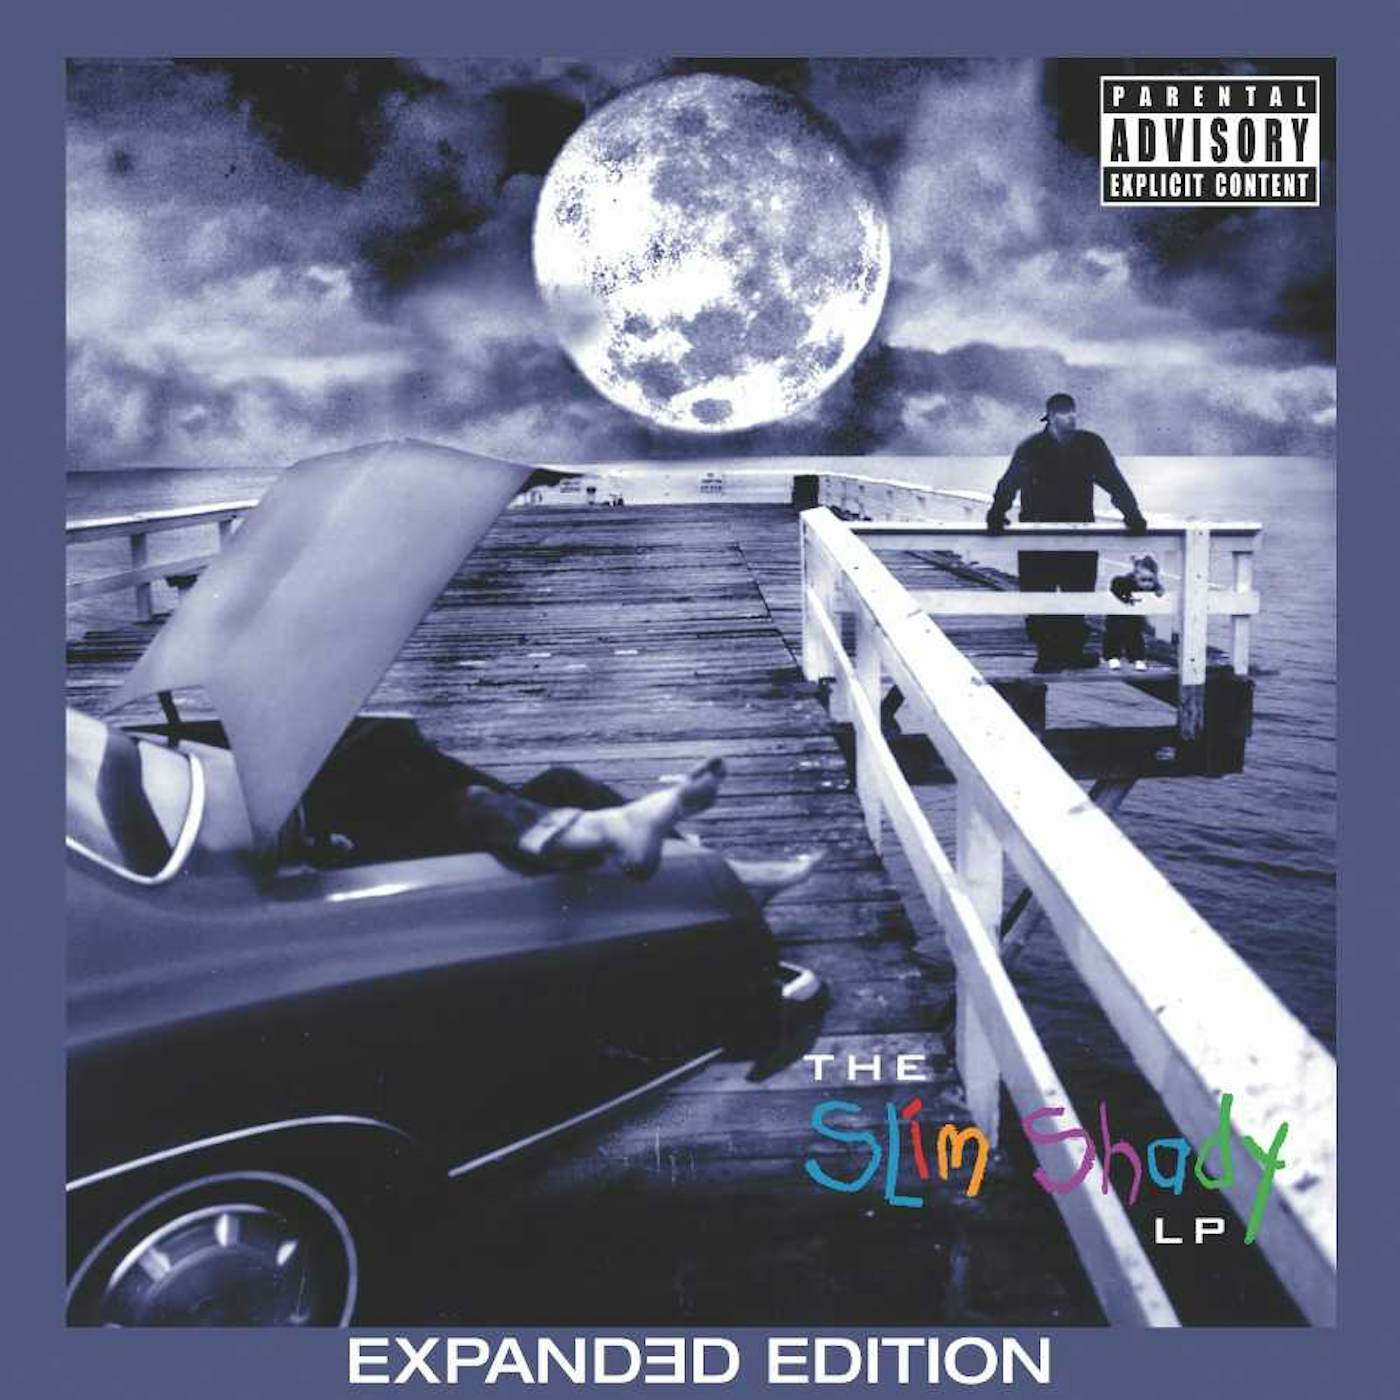 Eminem SLIM SHADY LP (3LP EXPANDED EDITION) (X) Vinyl Record